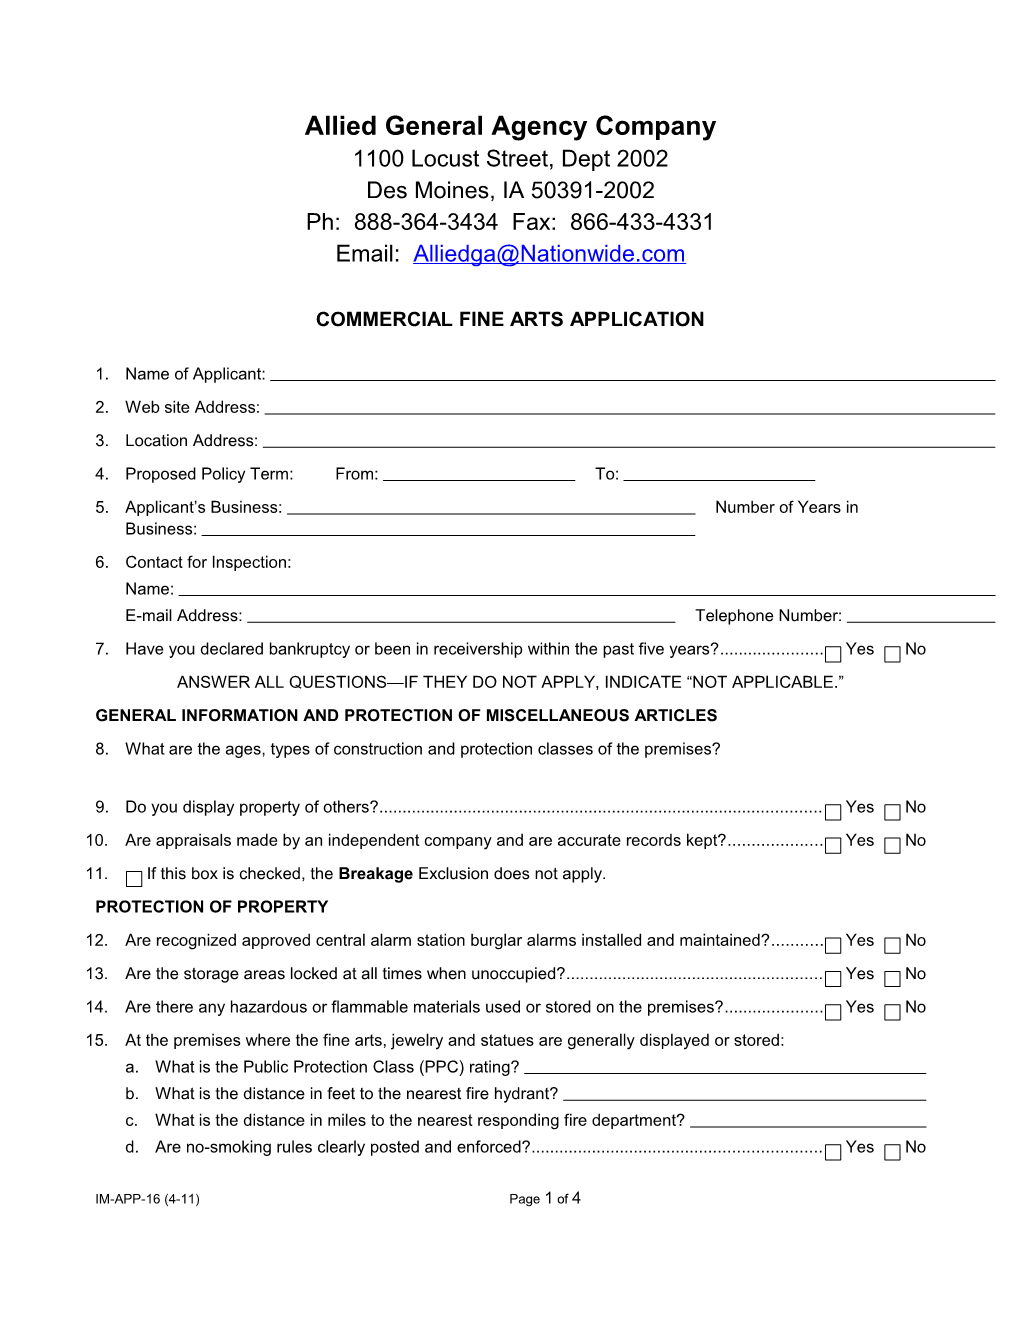 Commercial Fine Arts Application